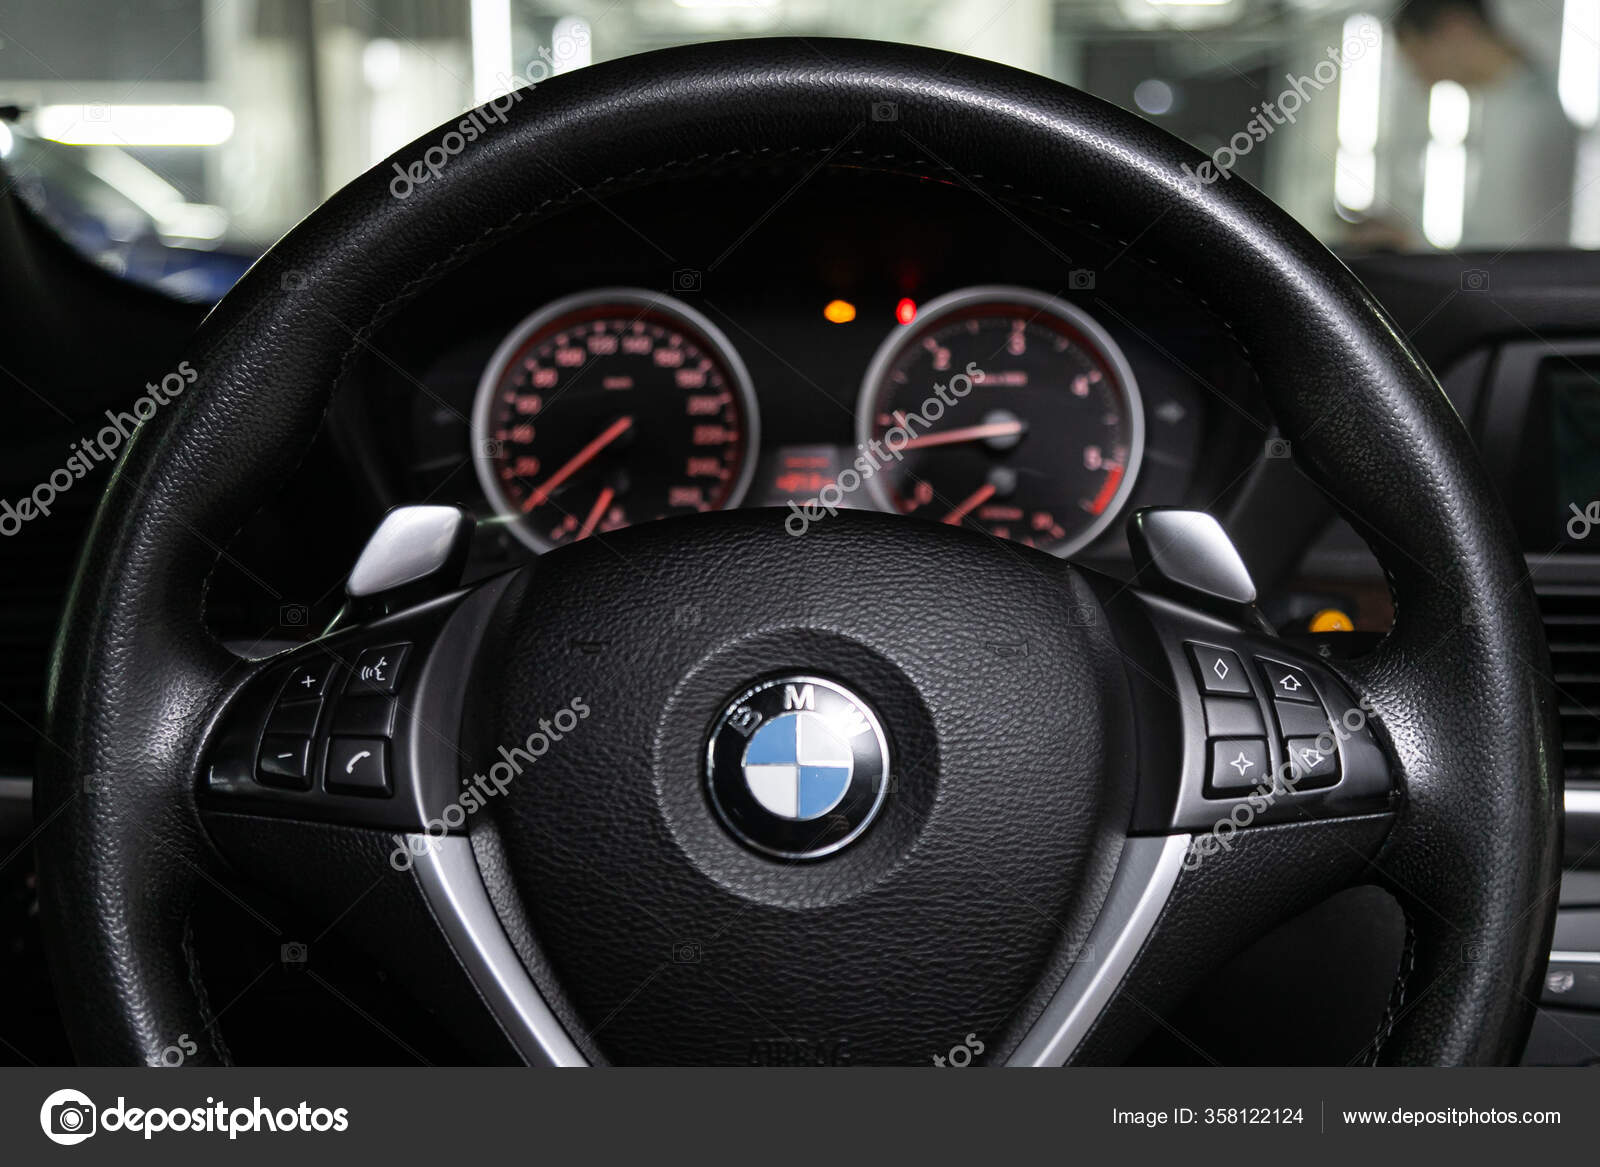 https://st3.depositphotos.com/11618586/35812/i/1600/depositphotos_358122124-stock-photo-bmw-dashboard-player-steering-wheel.jpg